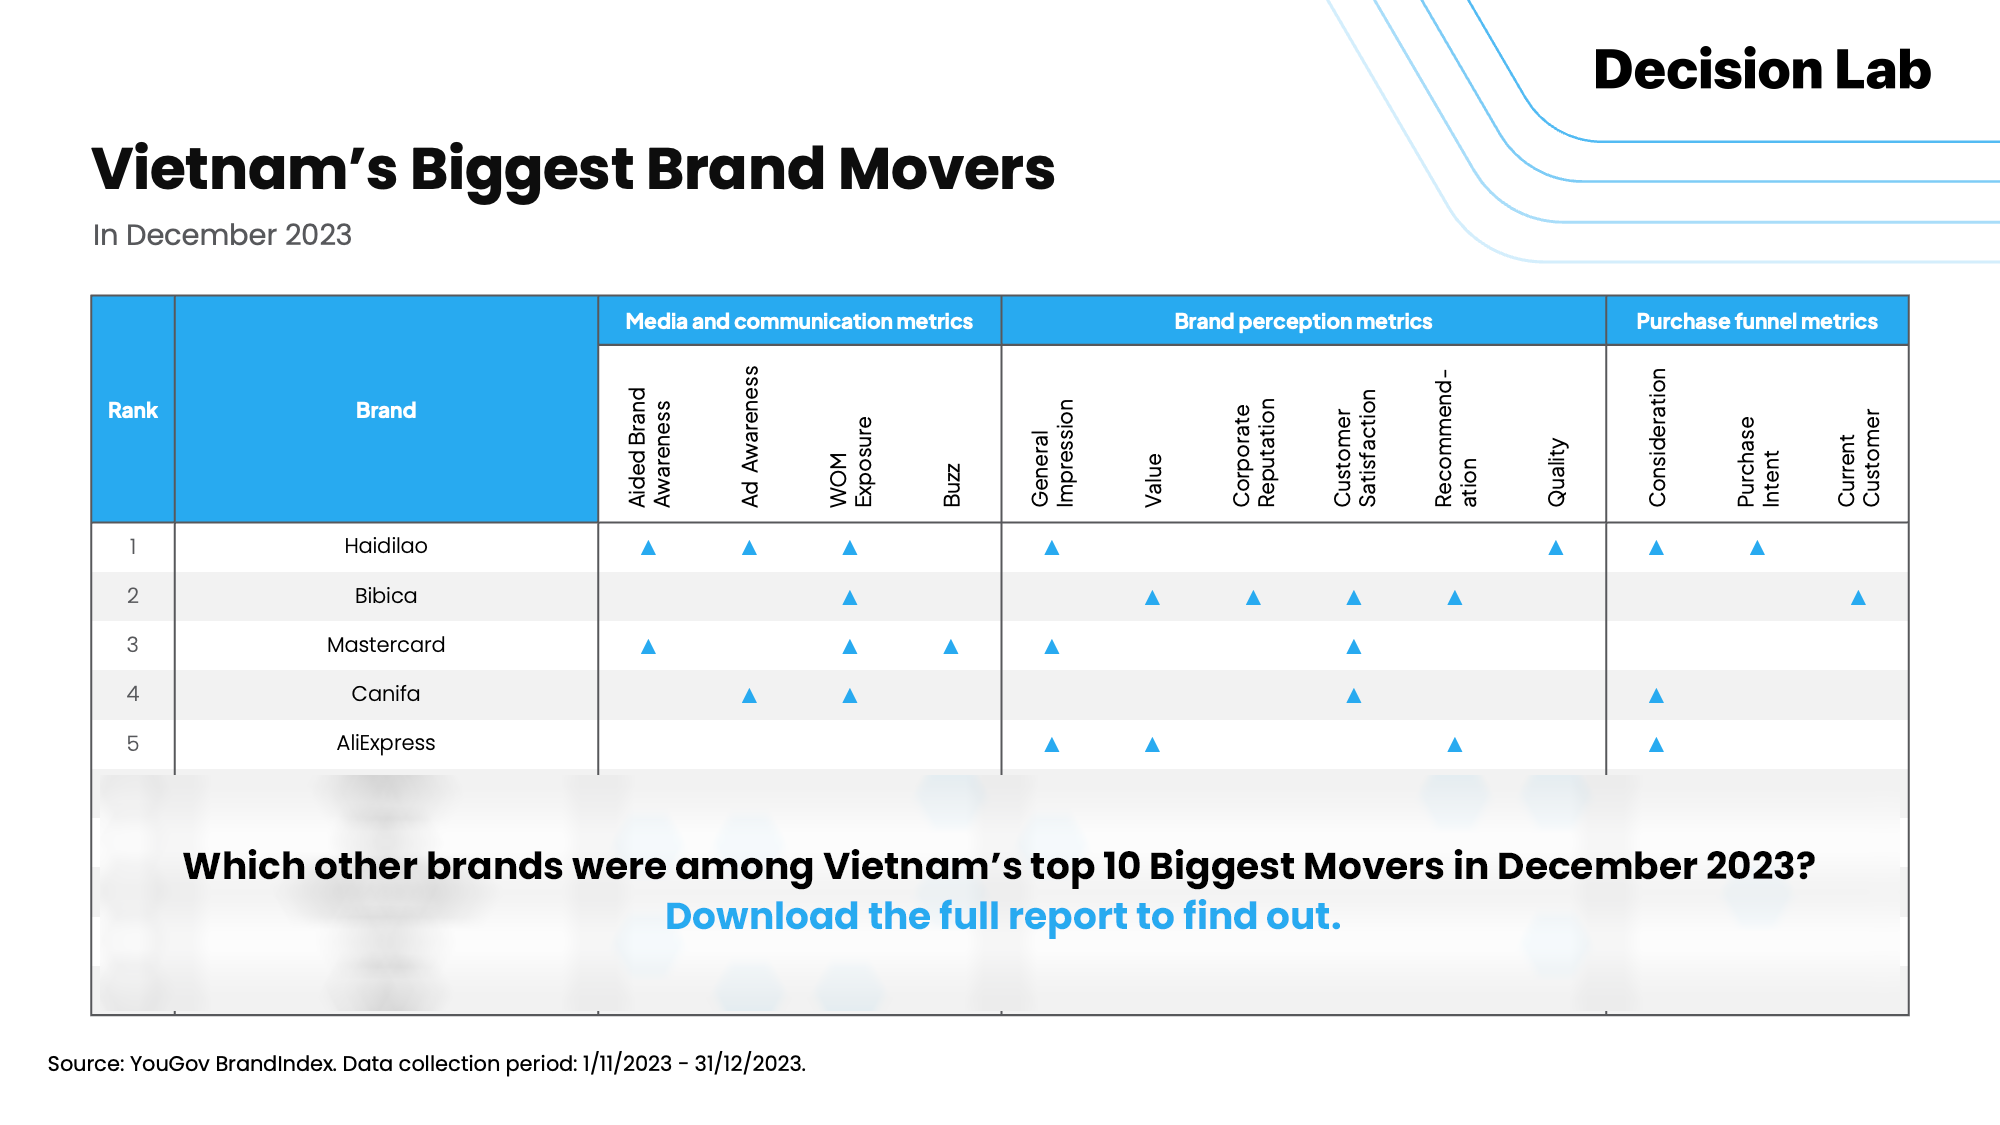 Vietnam's Biggest Brand Movers for Dec 23